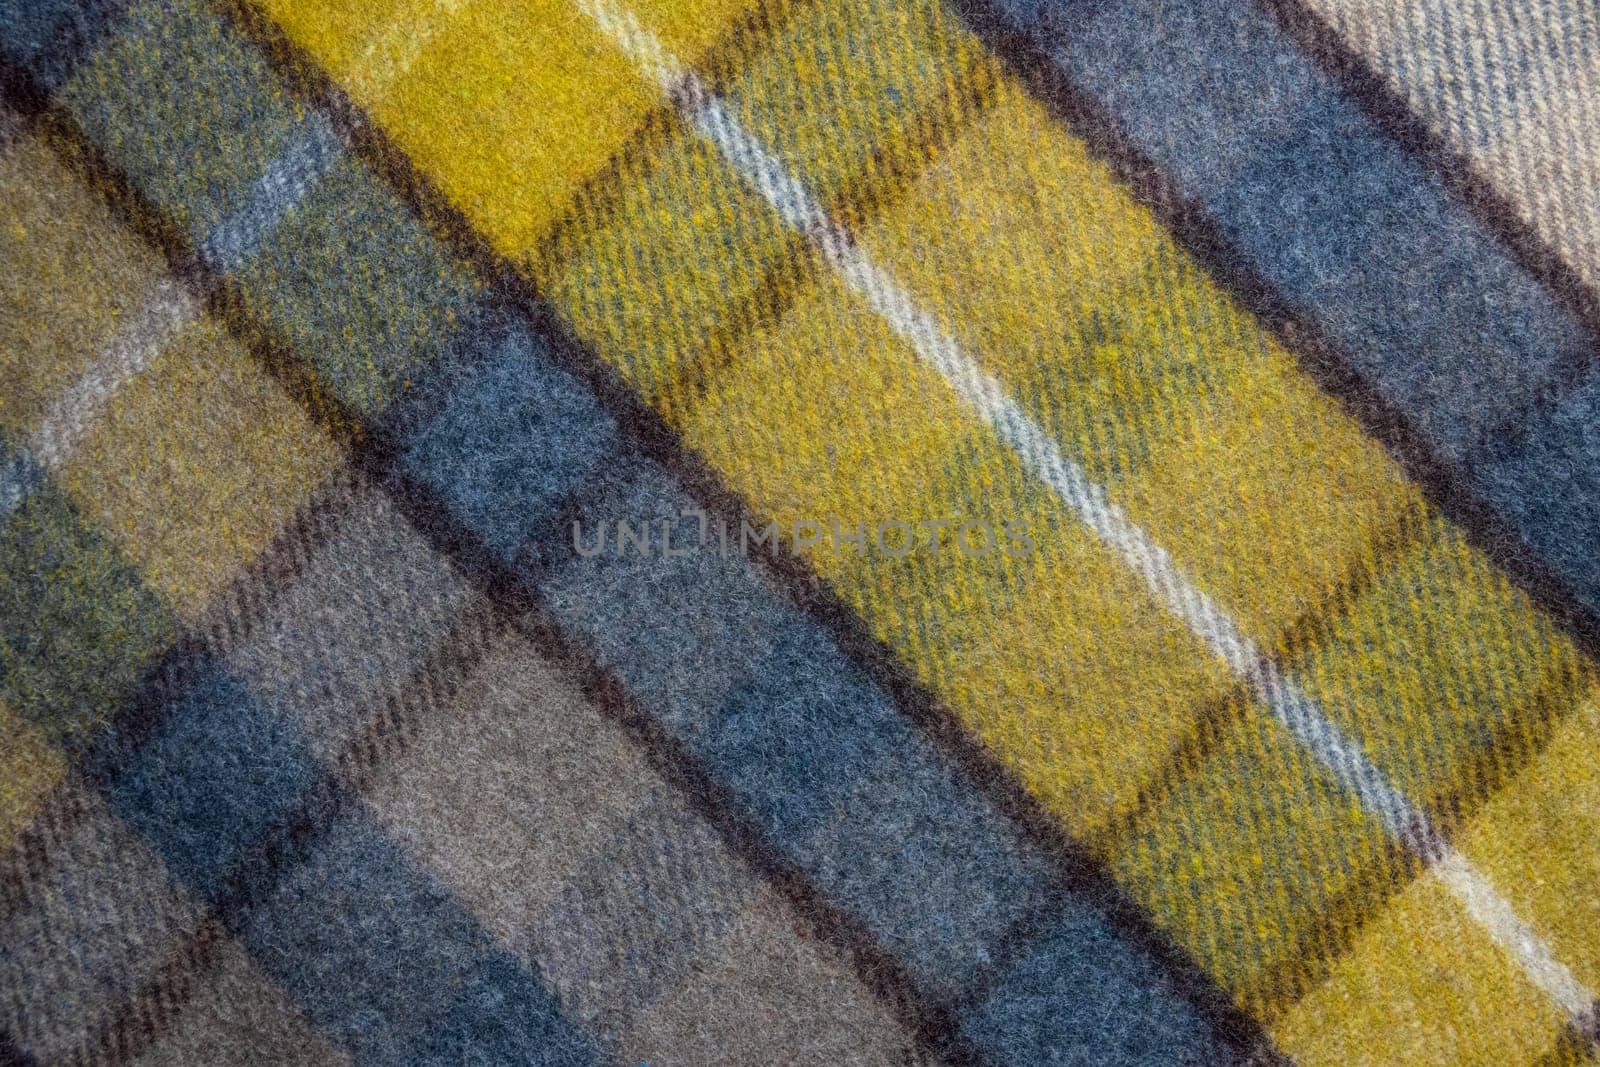 Background Texture Of A Woollen Tartan Plaid Blanket Or Shawl